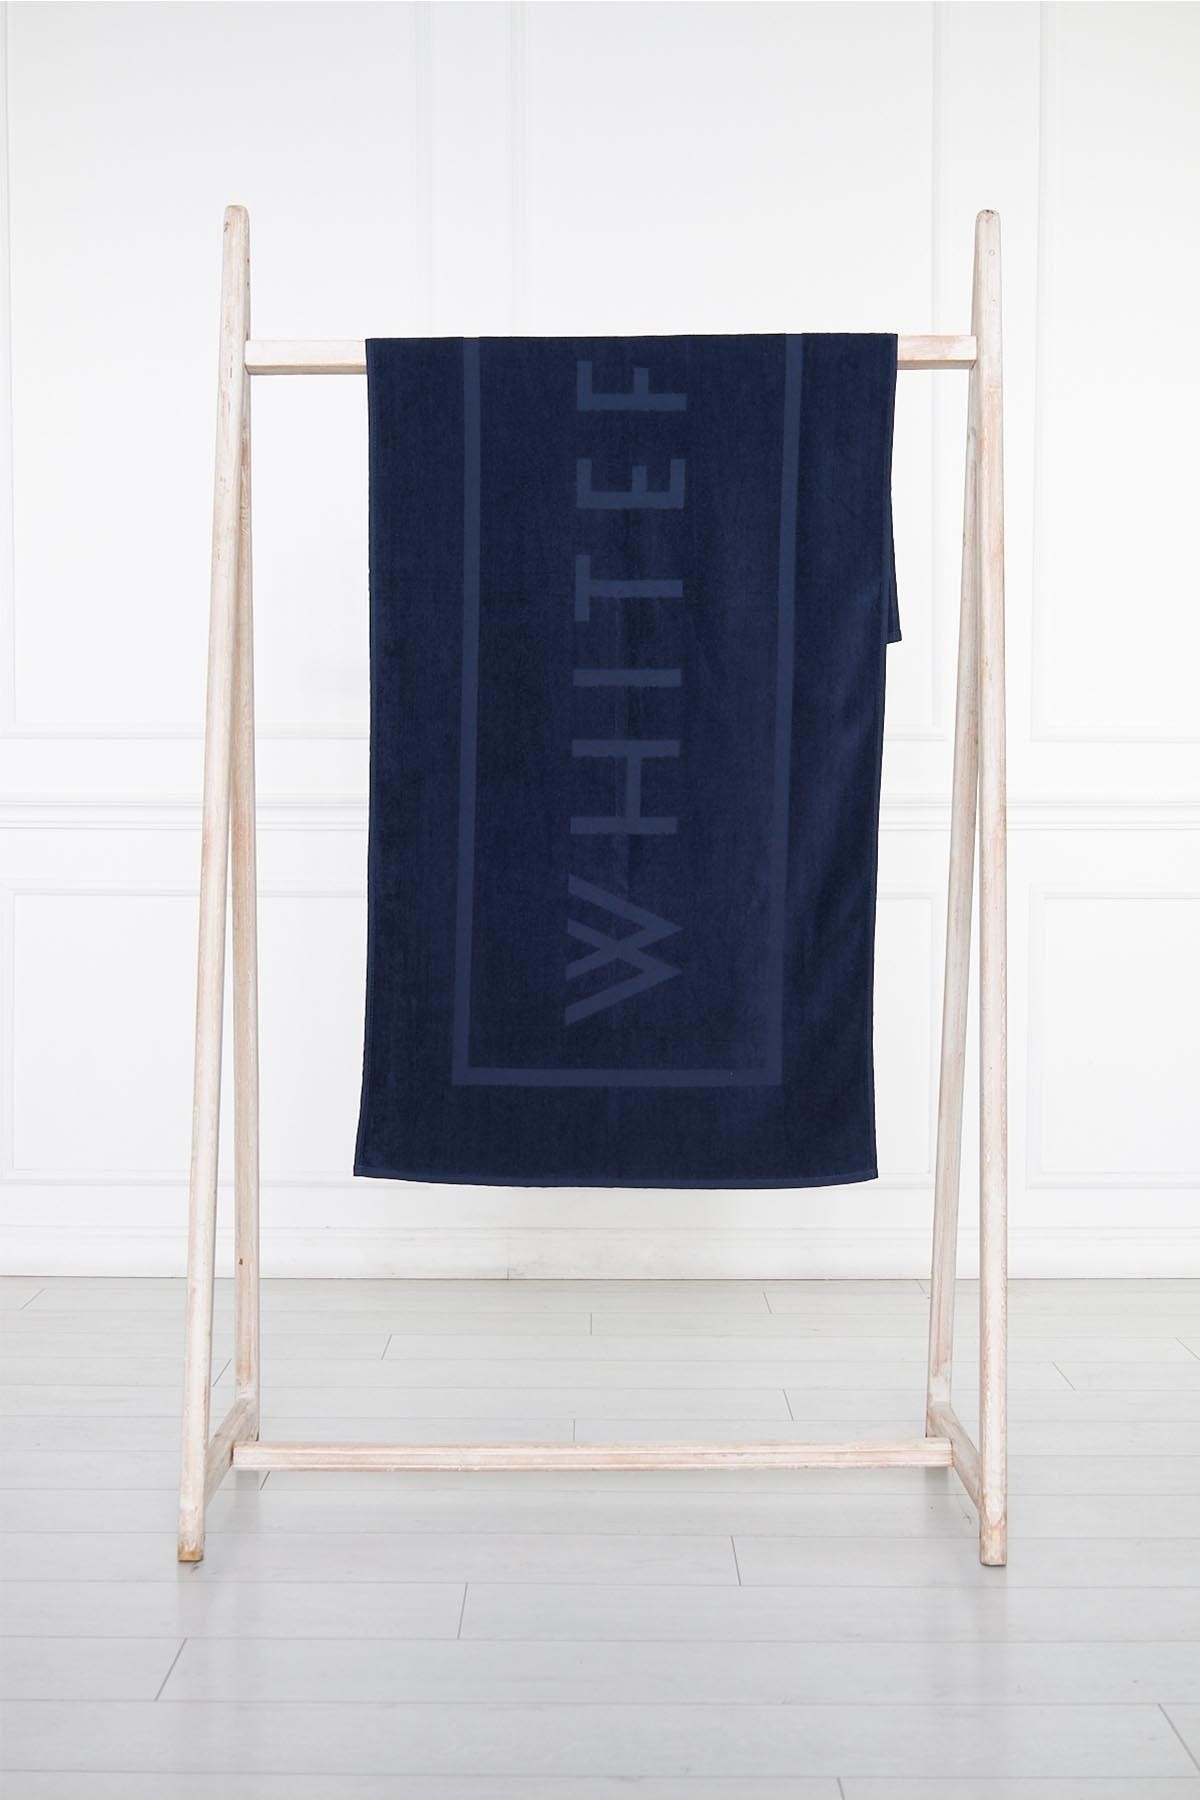 Navy Blue Beach Towel